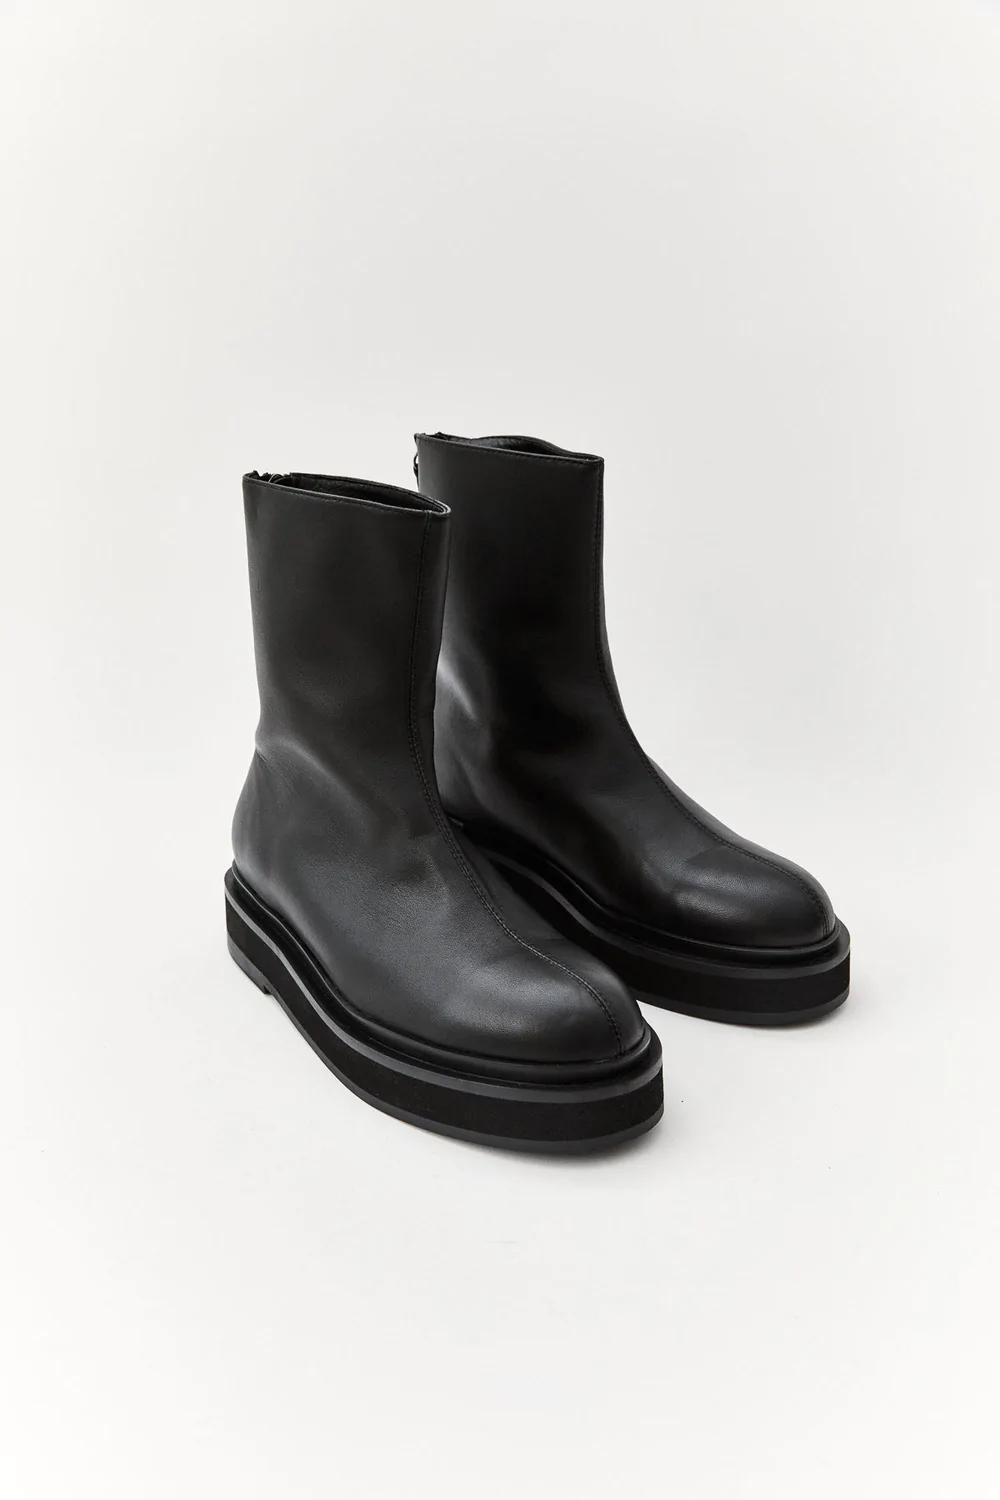 Product Image for Flatform Boot, Black